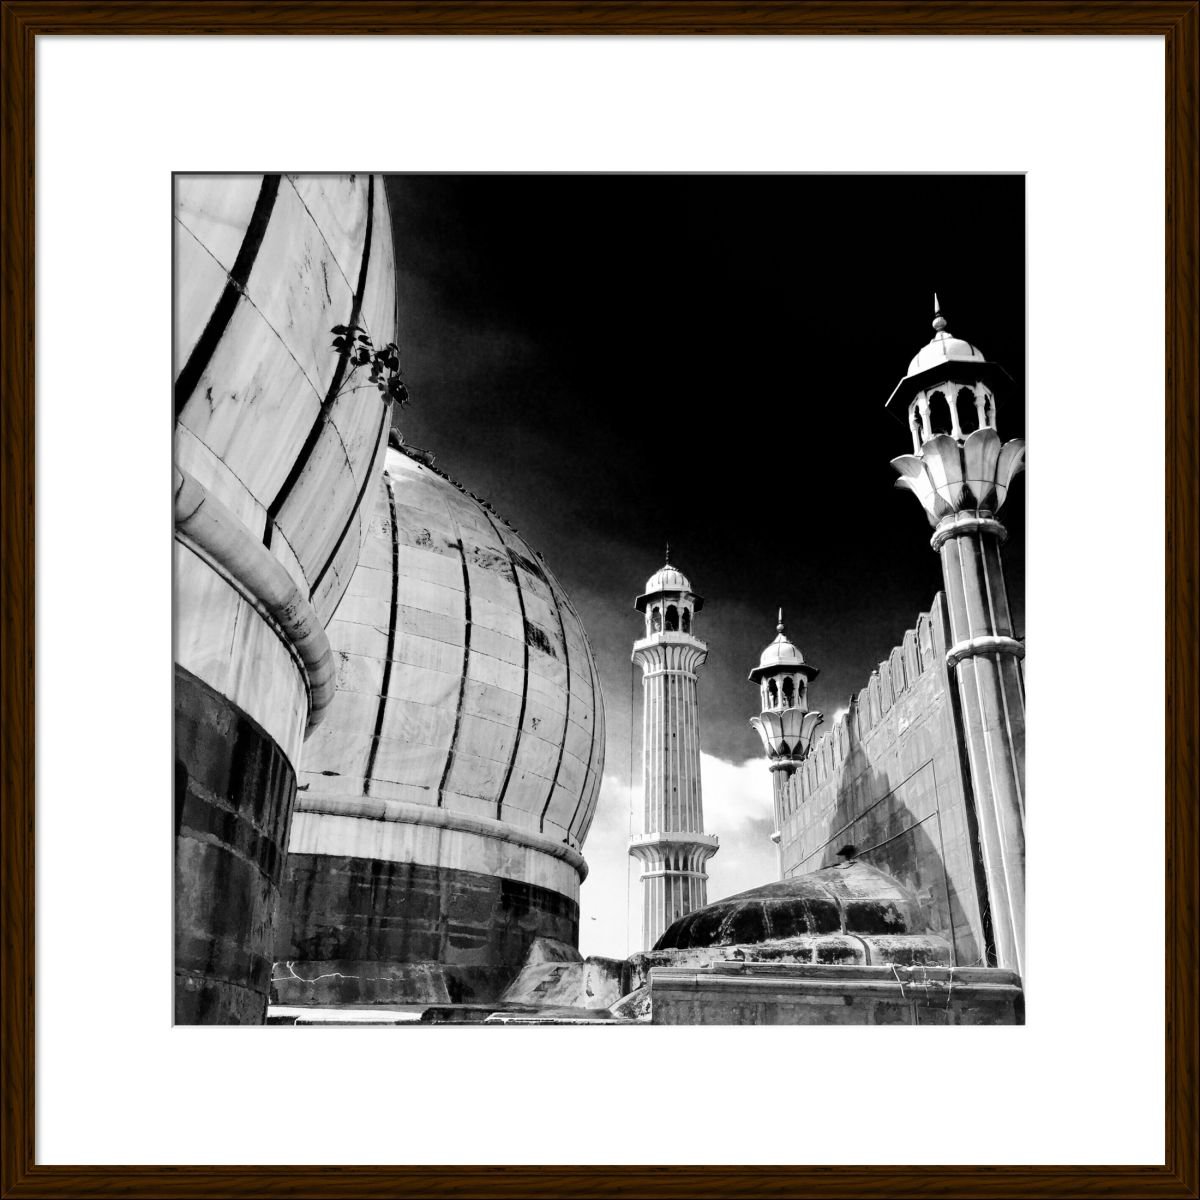 Jama masjid by Shabs Beigh